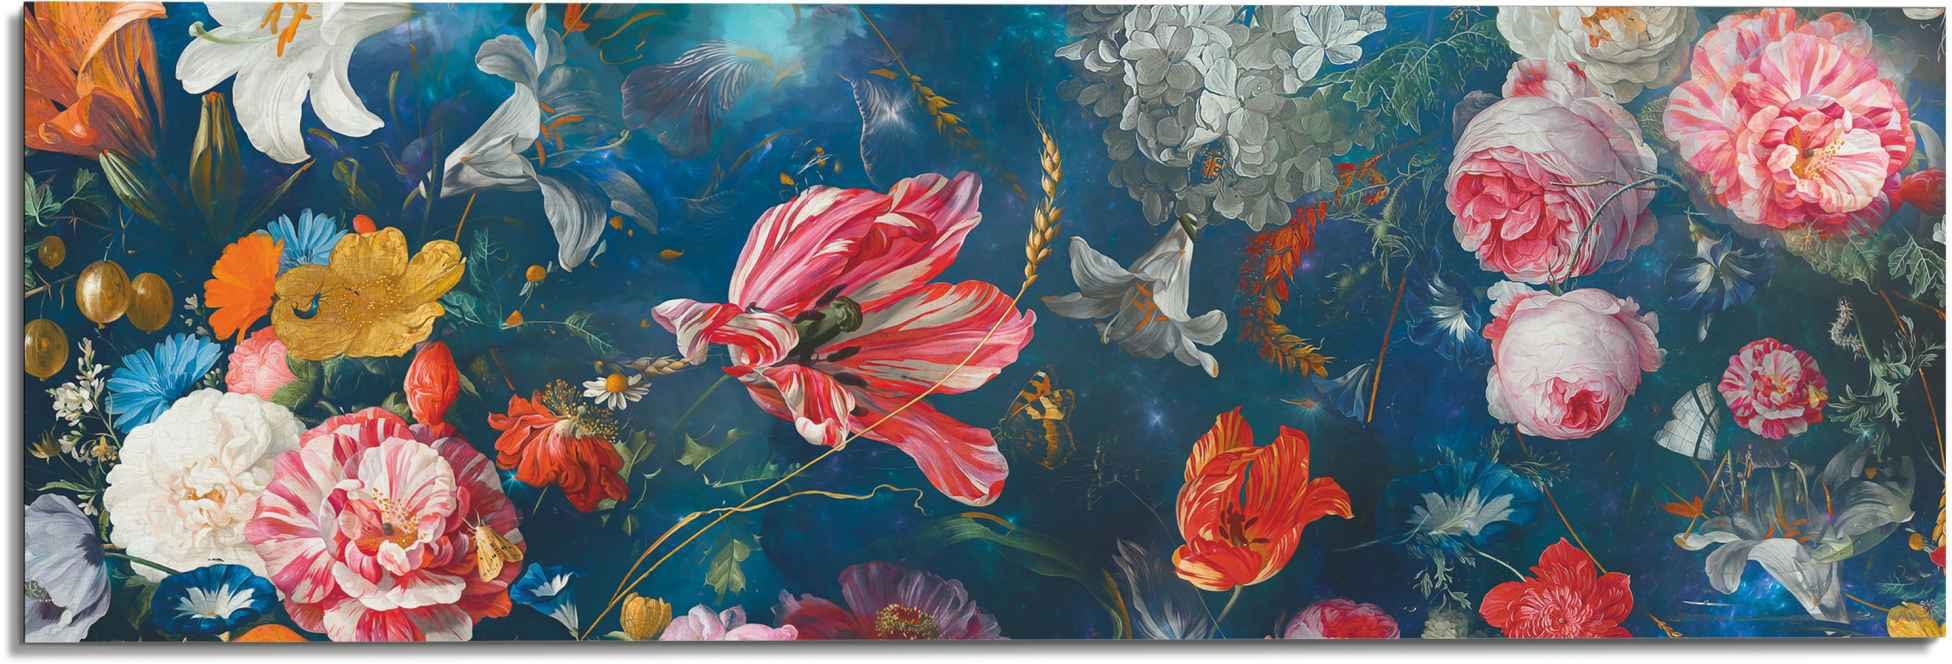 St) Blumen Blumenwelt Reinders! - - Blumen Wandbild Wandbild Farbenfroh (1 Pflanzen,